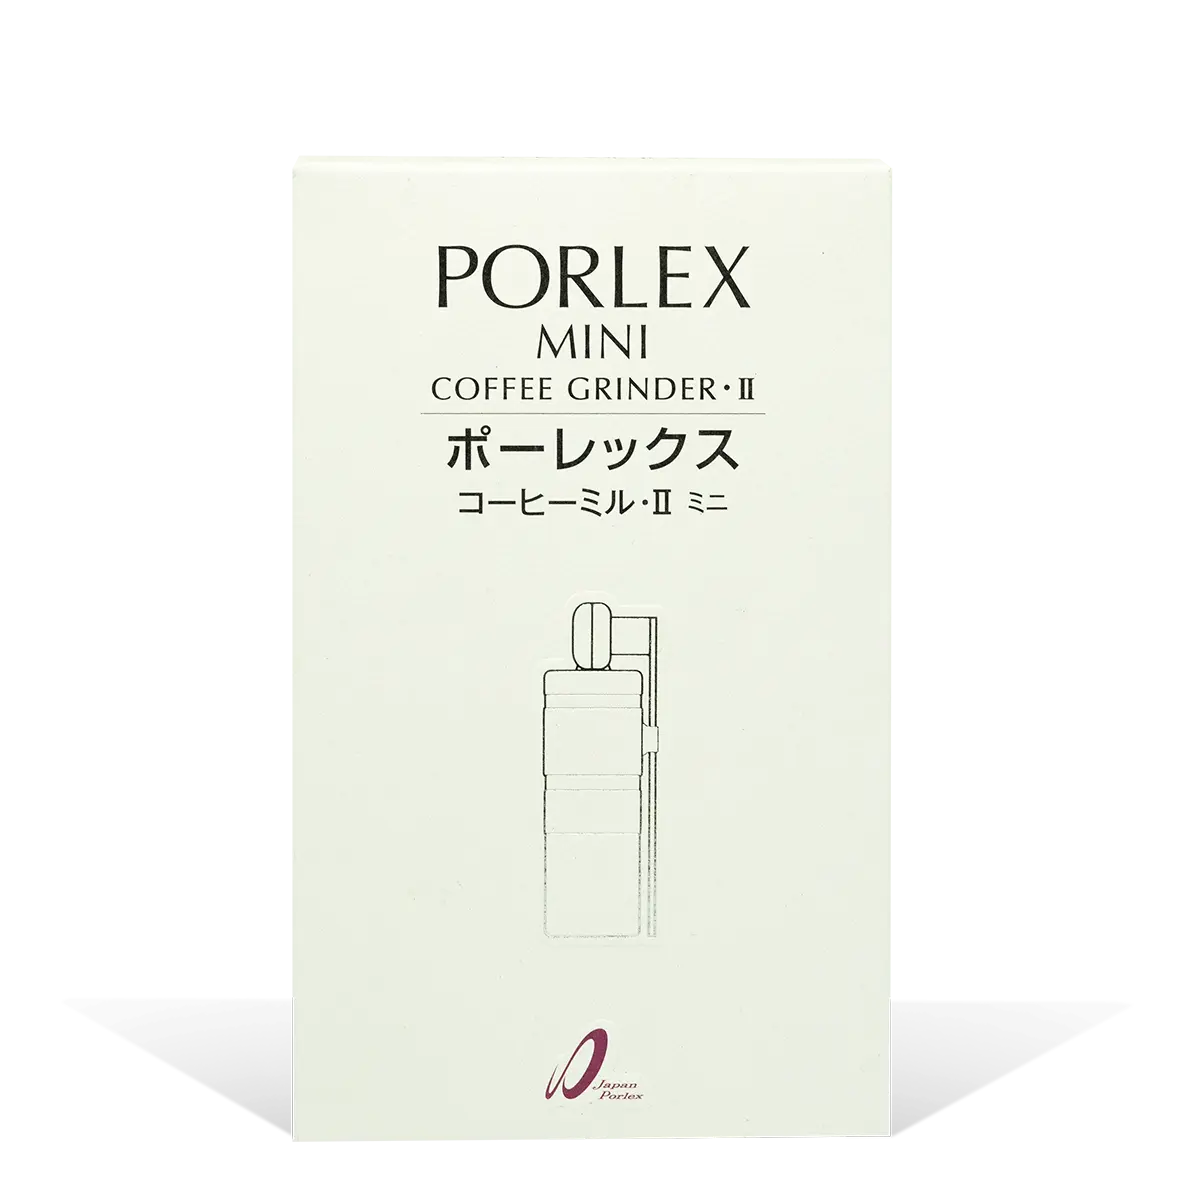 Porlex Mini Coffee Grinder II Porlex